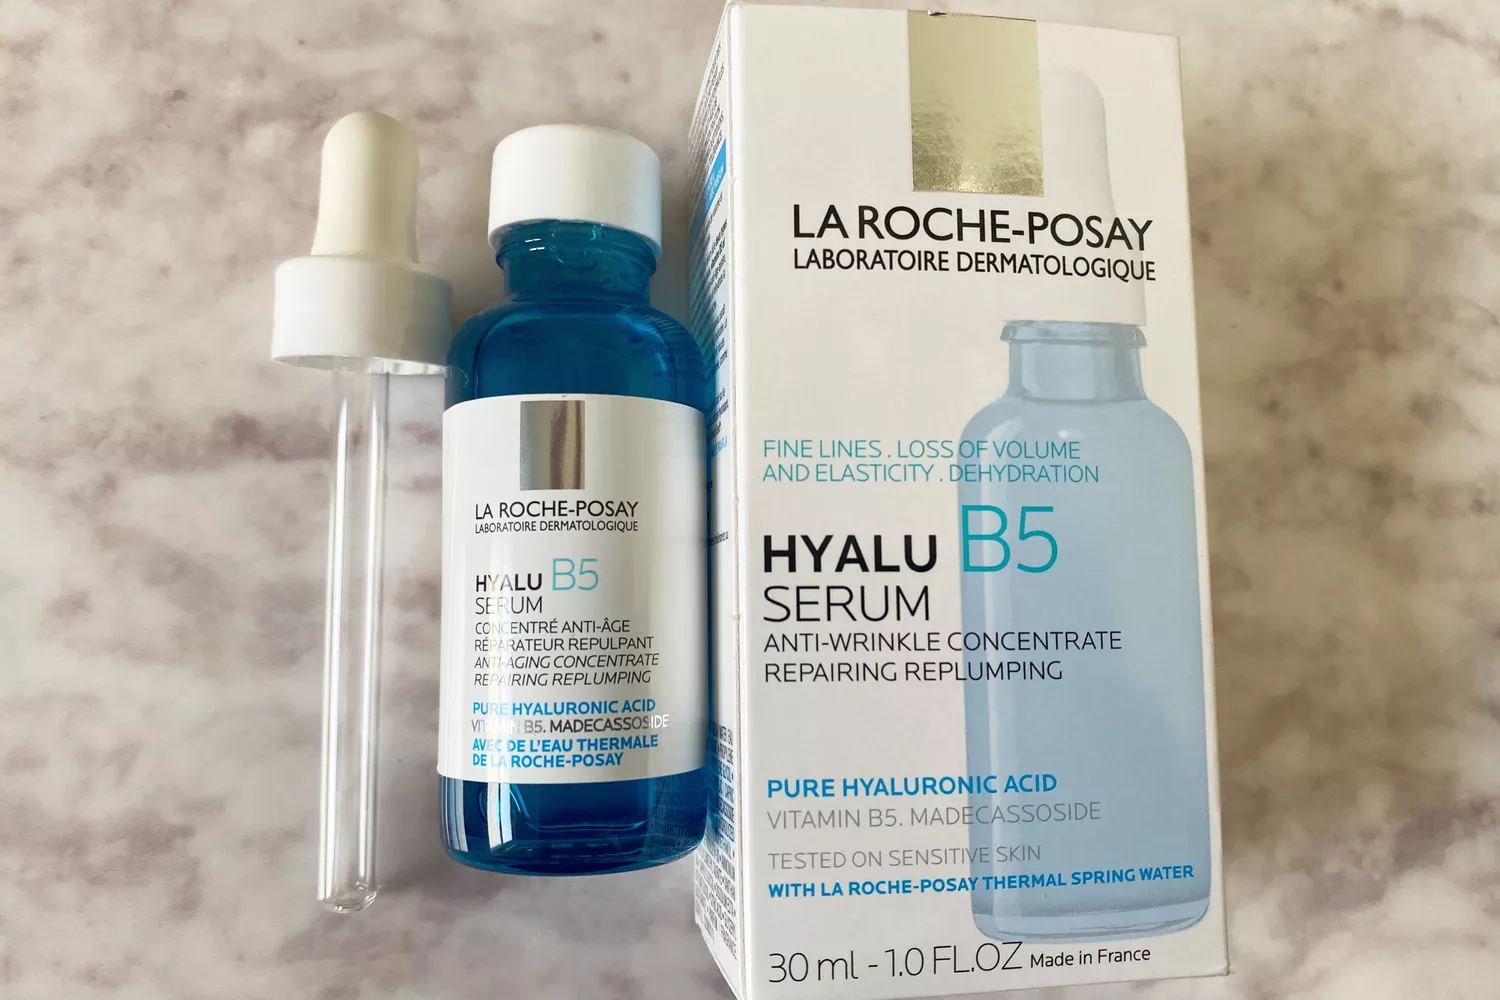 The La Roche-Posay Hyalu B5 Pure Hyaluronic Acid Serum bottle and box